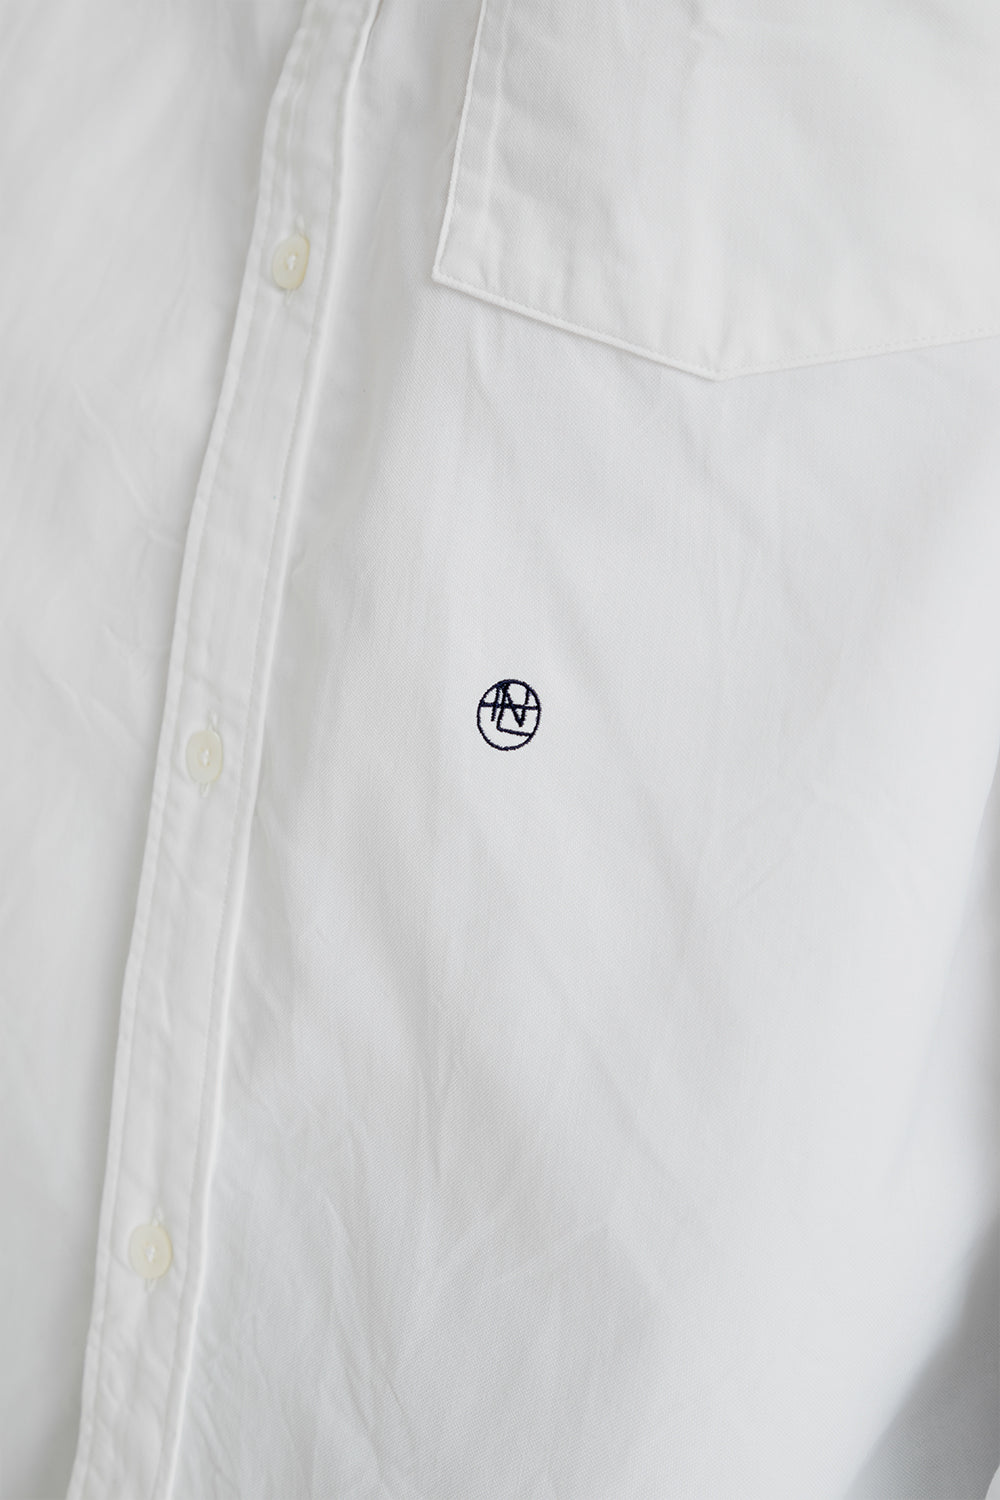 Nanamica Button Down Wind Shirt in White